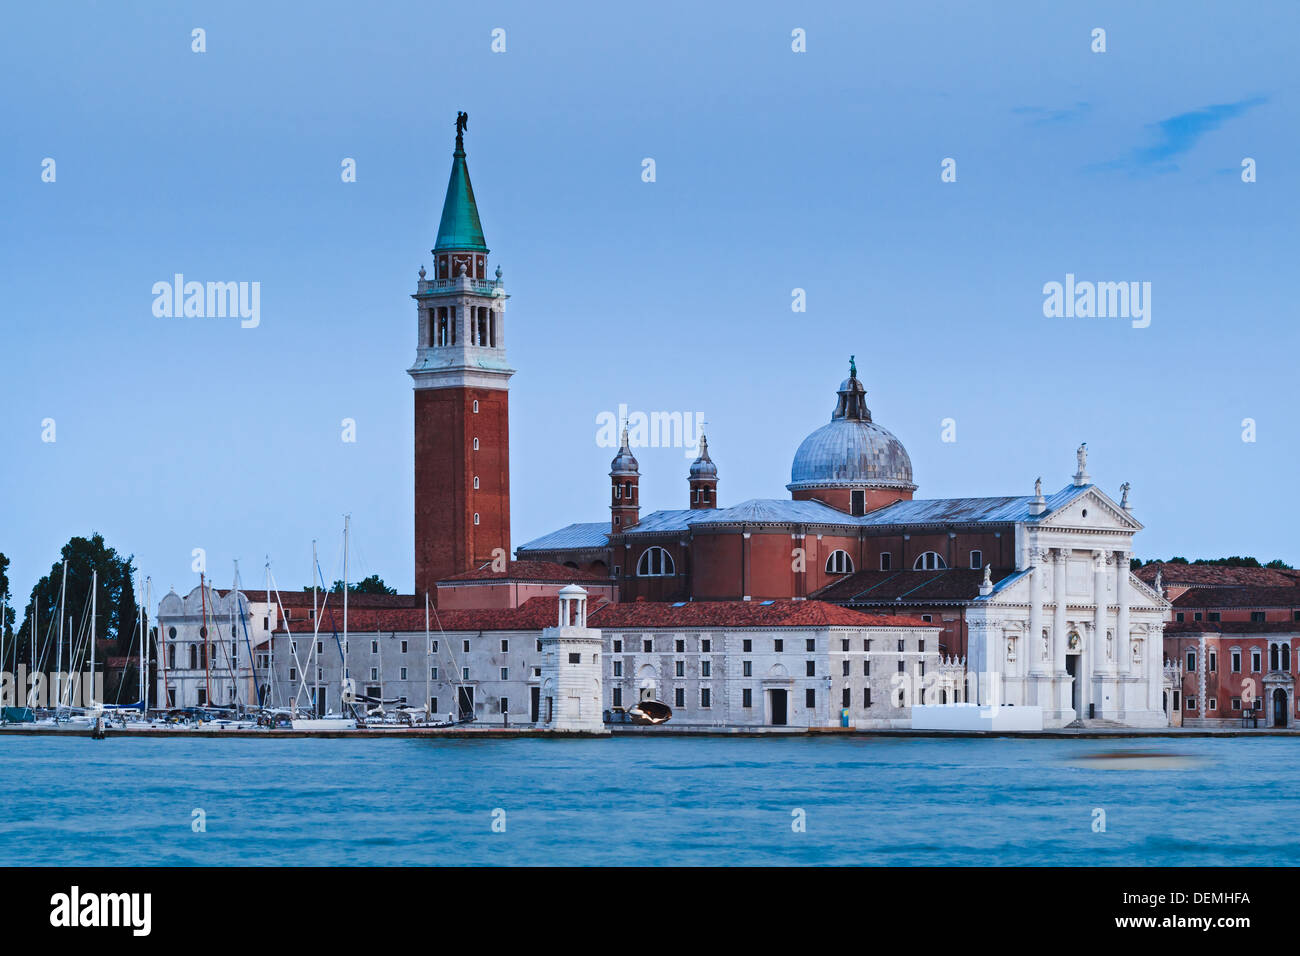 Italien Venedig Stadtblick auf San Giorgioi Maggiore Insel, Kirche und Kloster mit hohen Backsteinturm, Dom und Dom über ca Stockfoto